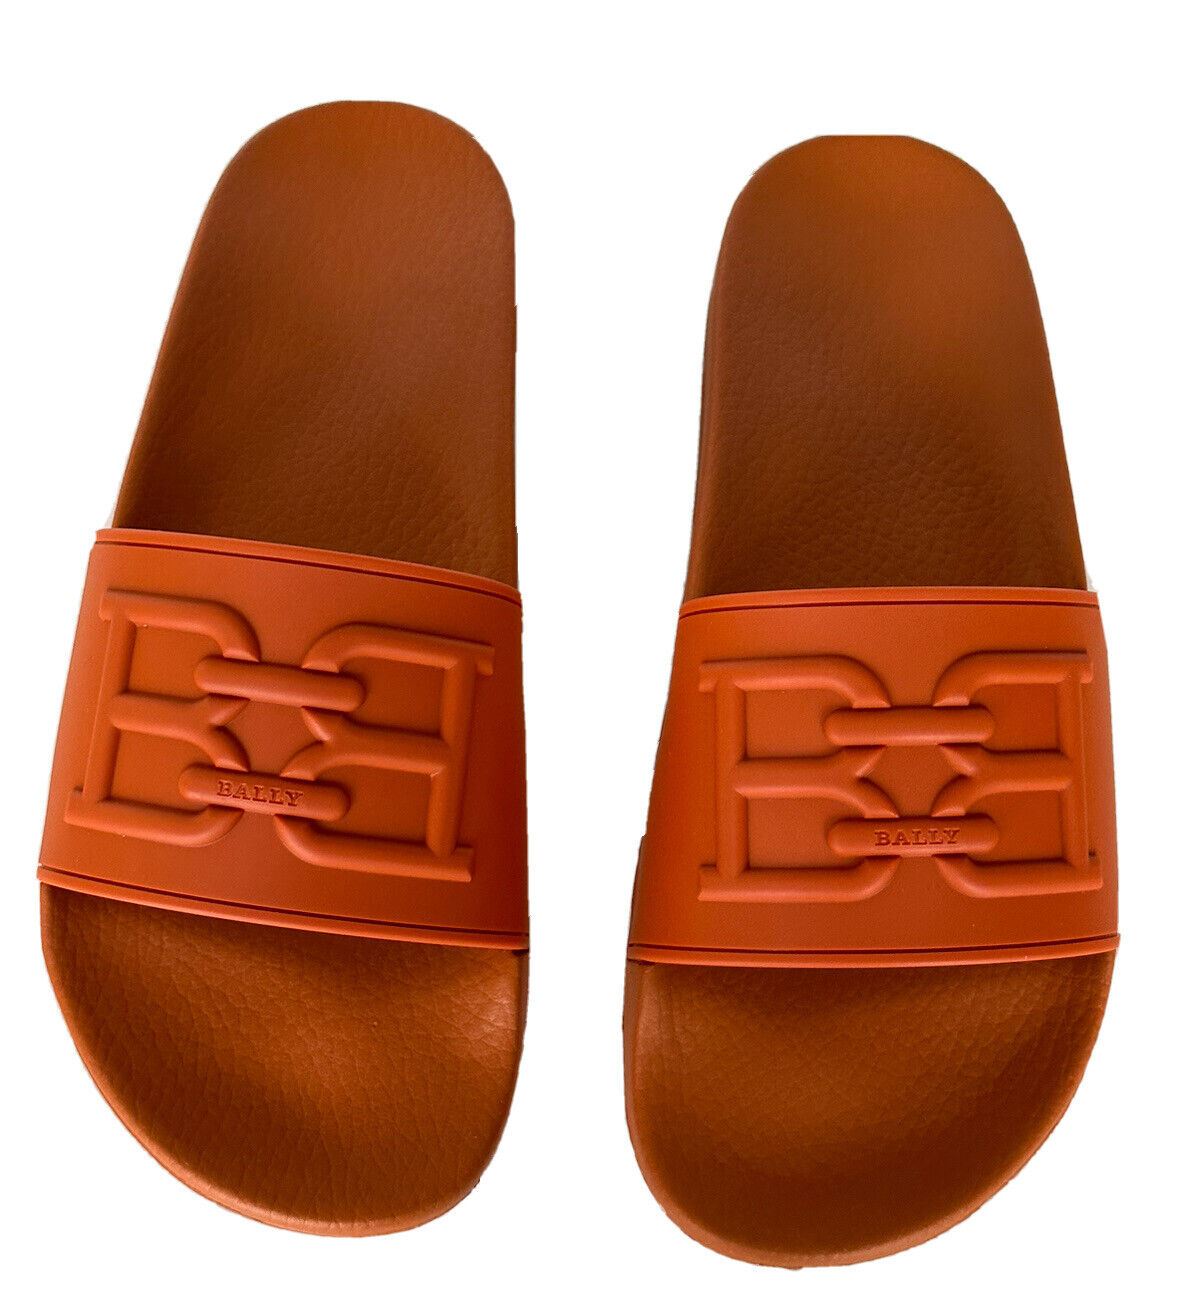 NIB Bally Scotty Men's Slide Rubber Mandarin Logo Sandals 12 US 6300612 Italy